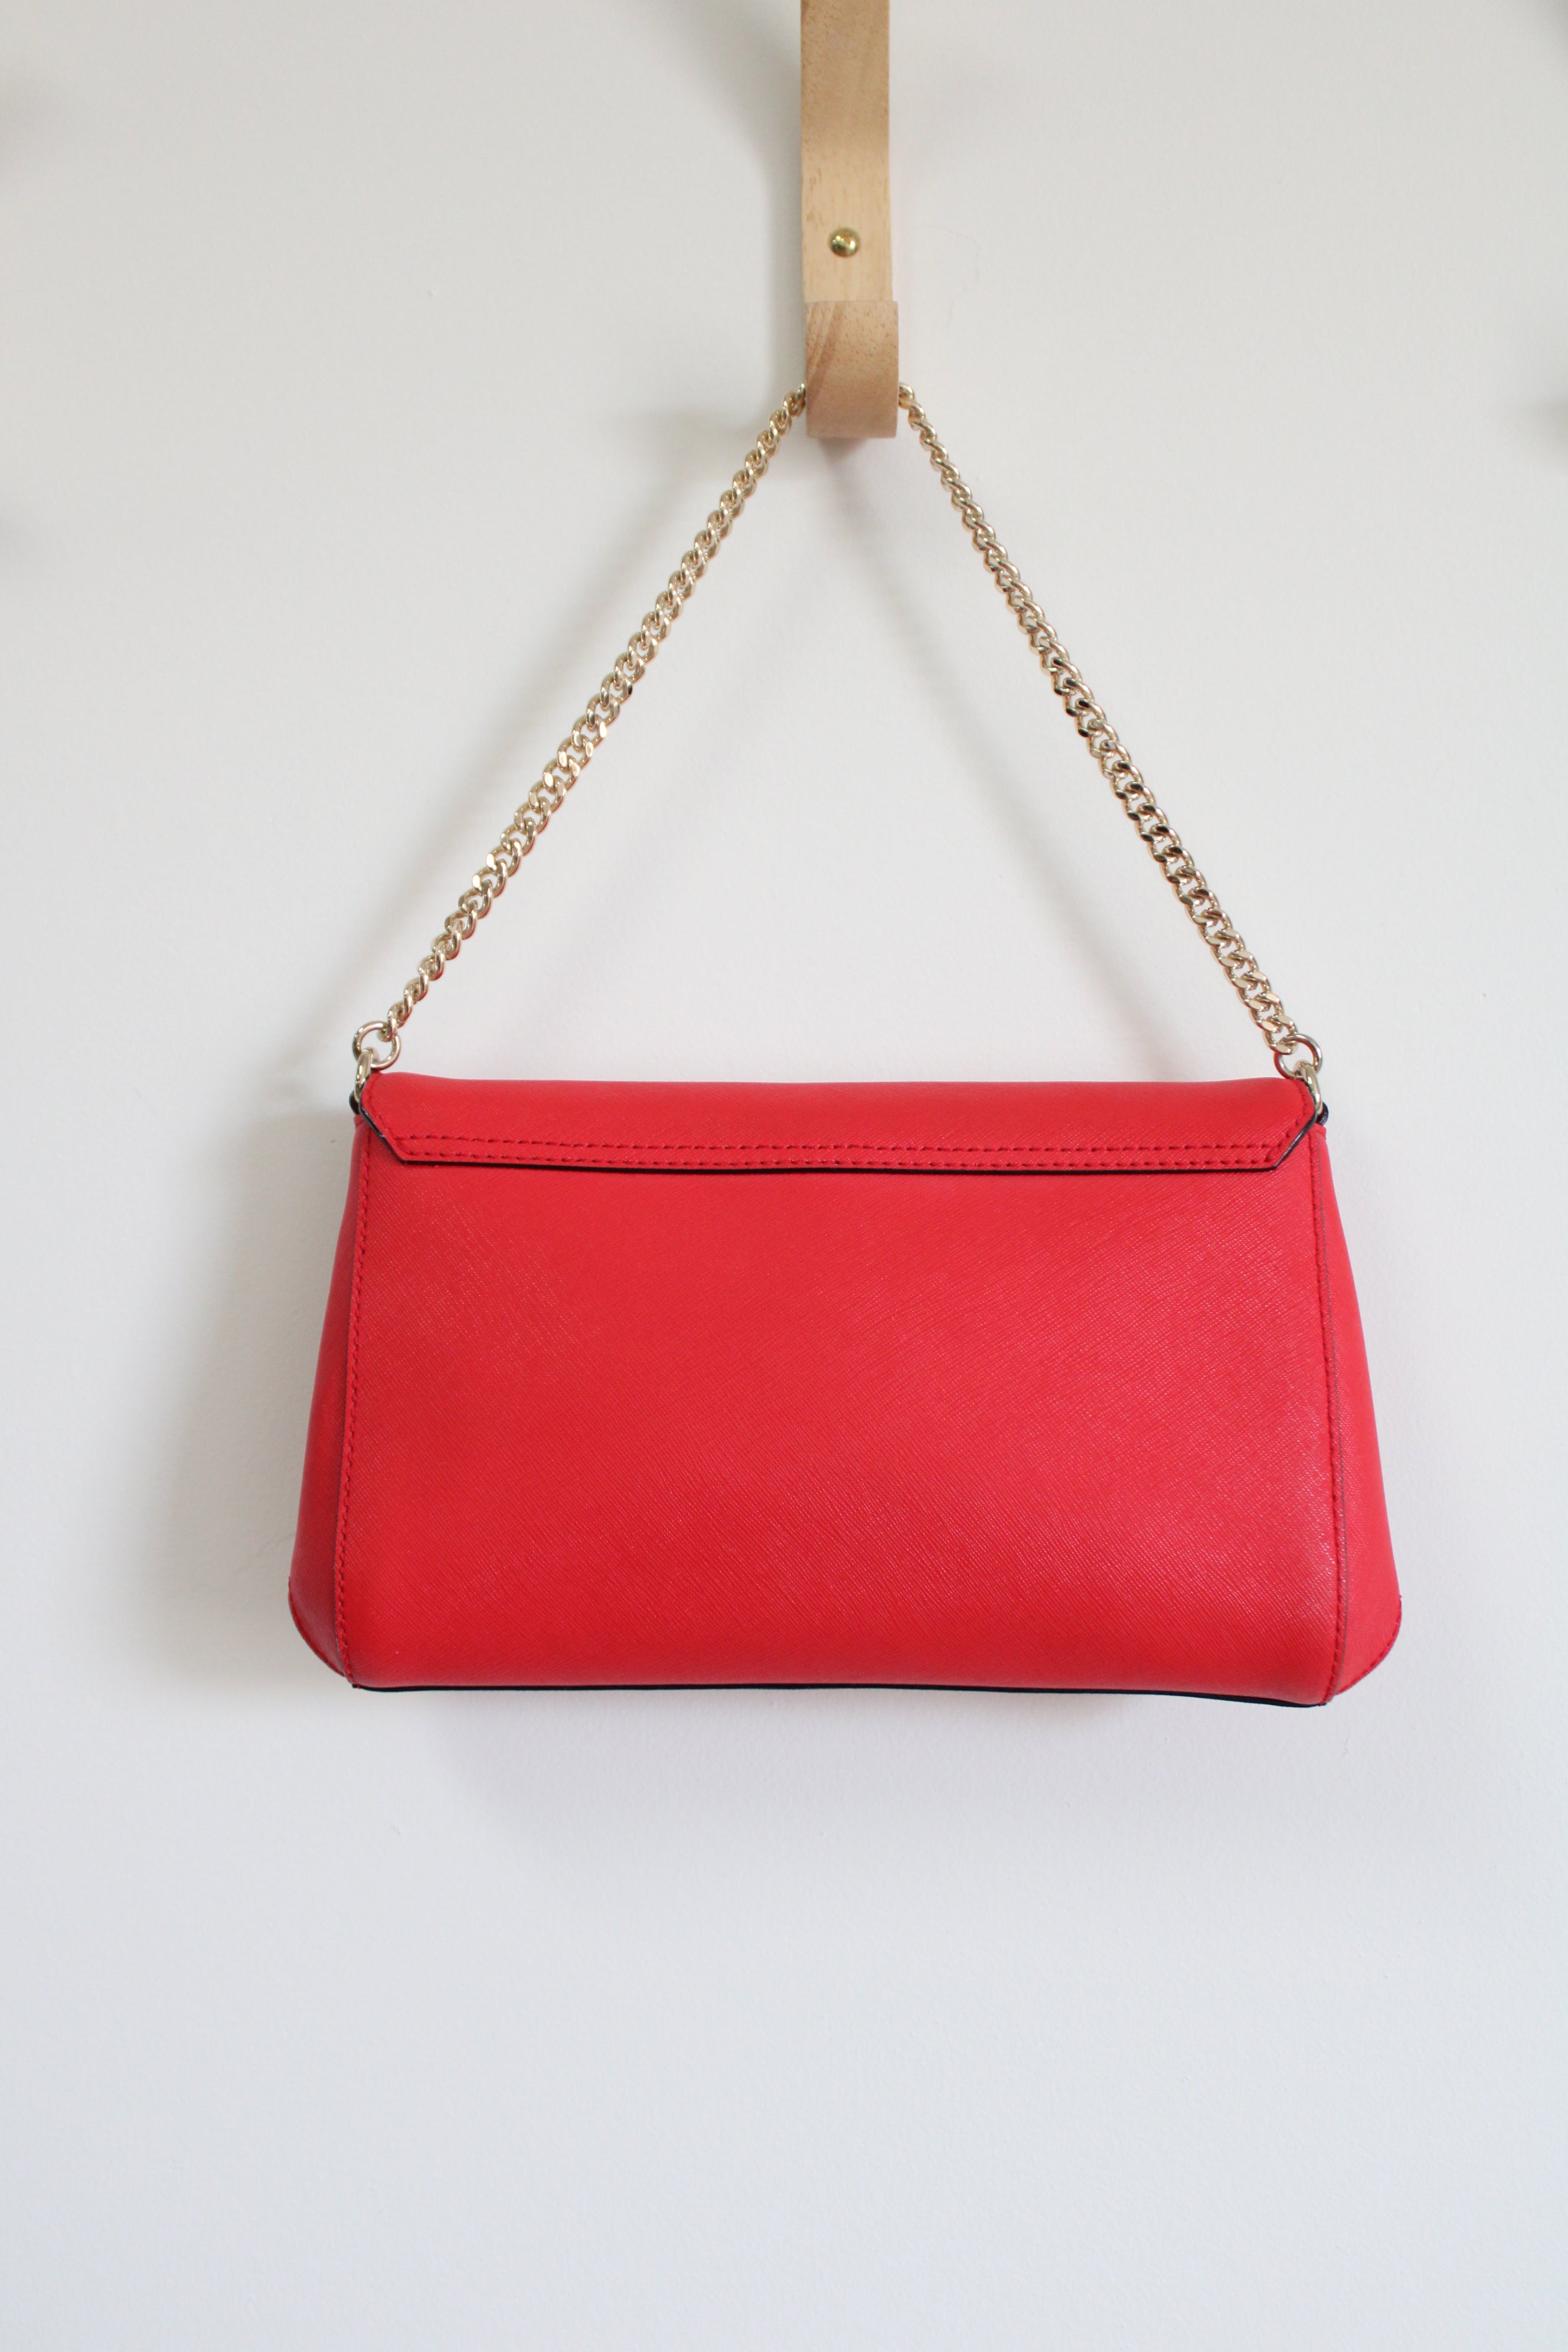 Kate Spade New York COBBLE HILL SMALL LESLIE SATCHEL Red Purse Bag | eBay